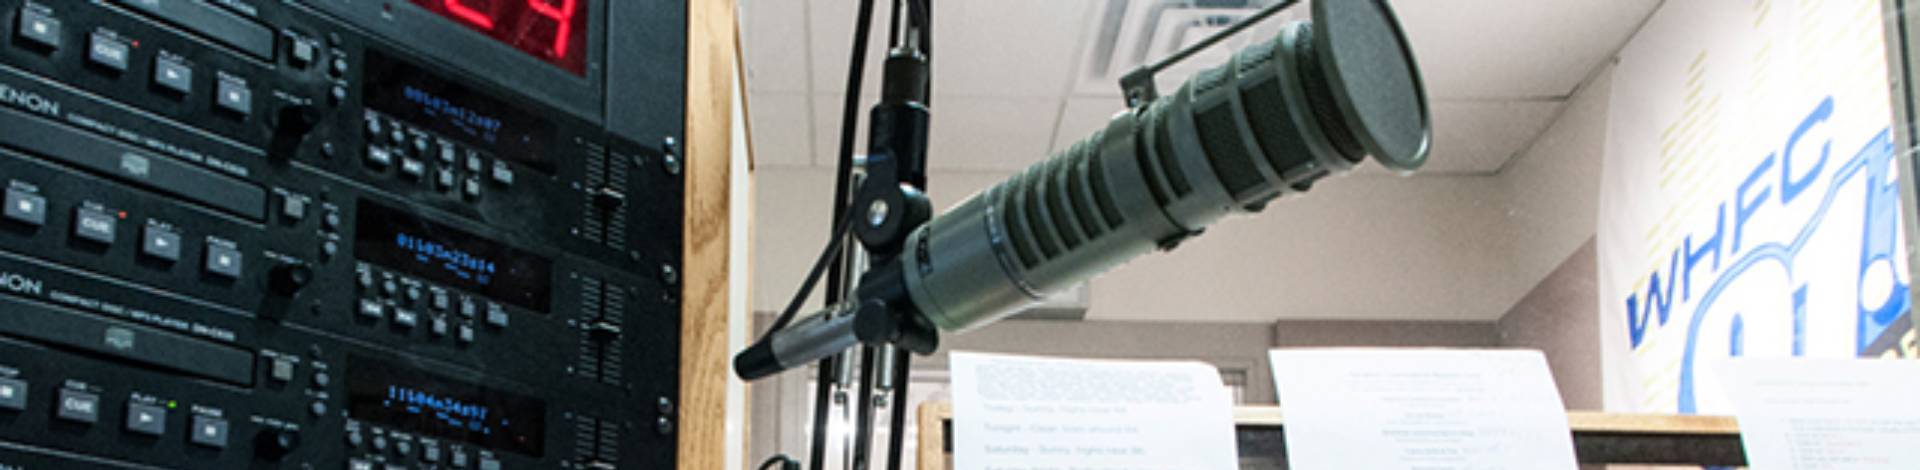 microphone at radio sound board